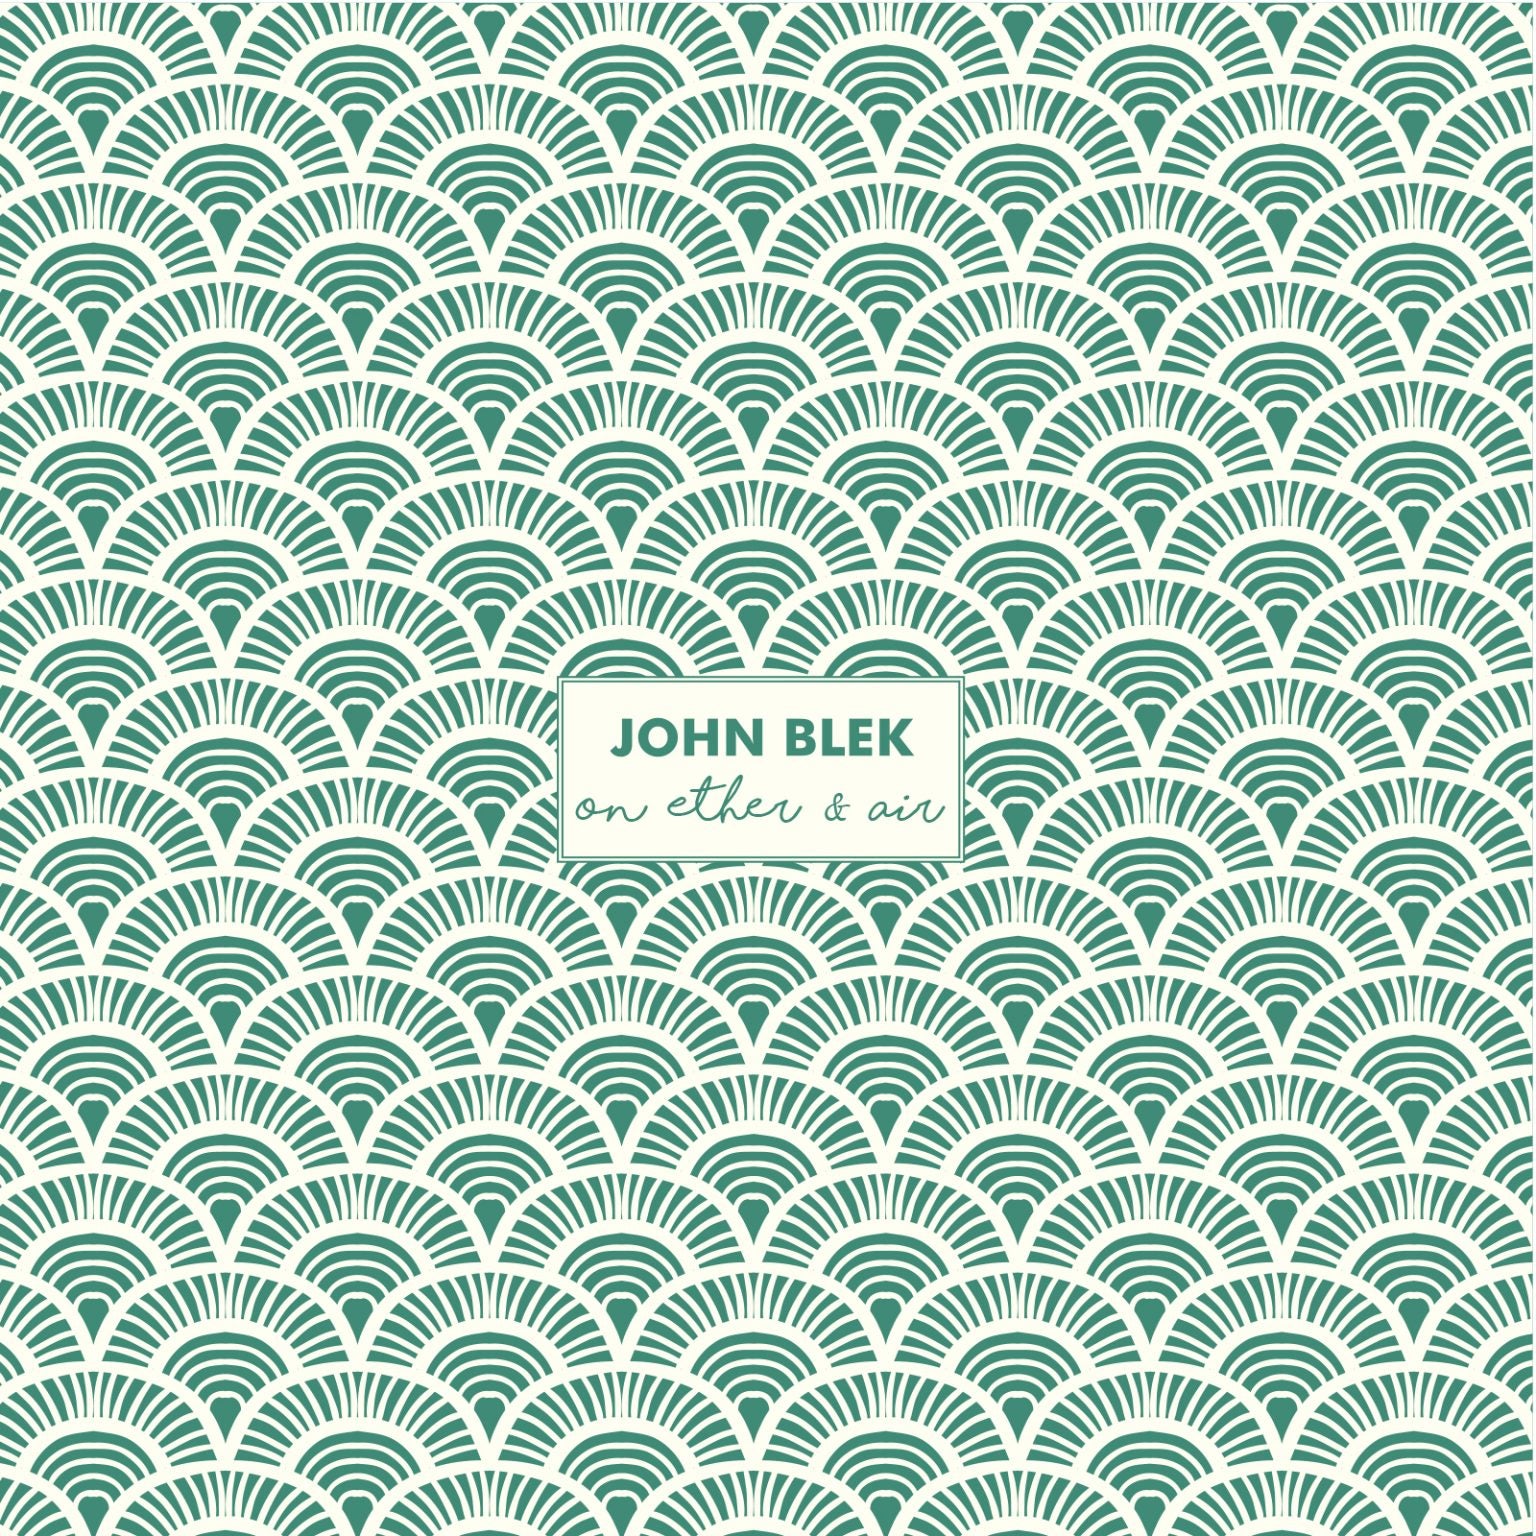 John Blek On Ether and Air - Ireland Vinyl